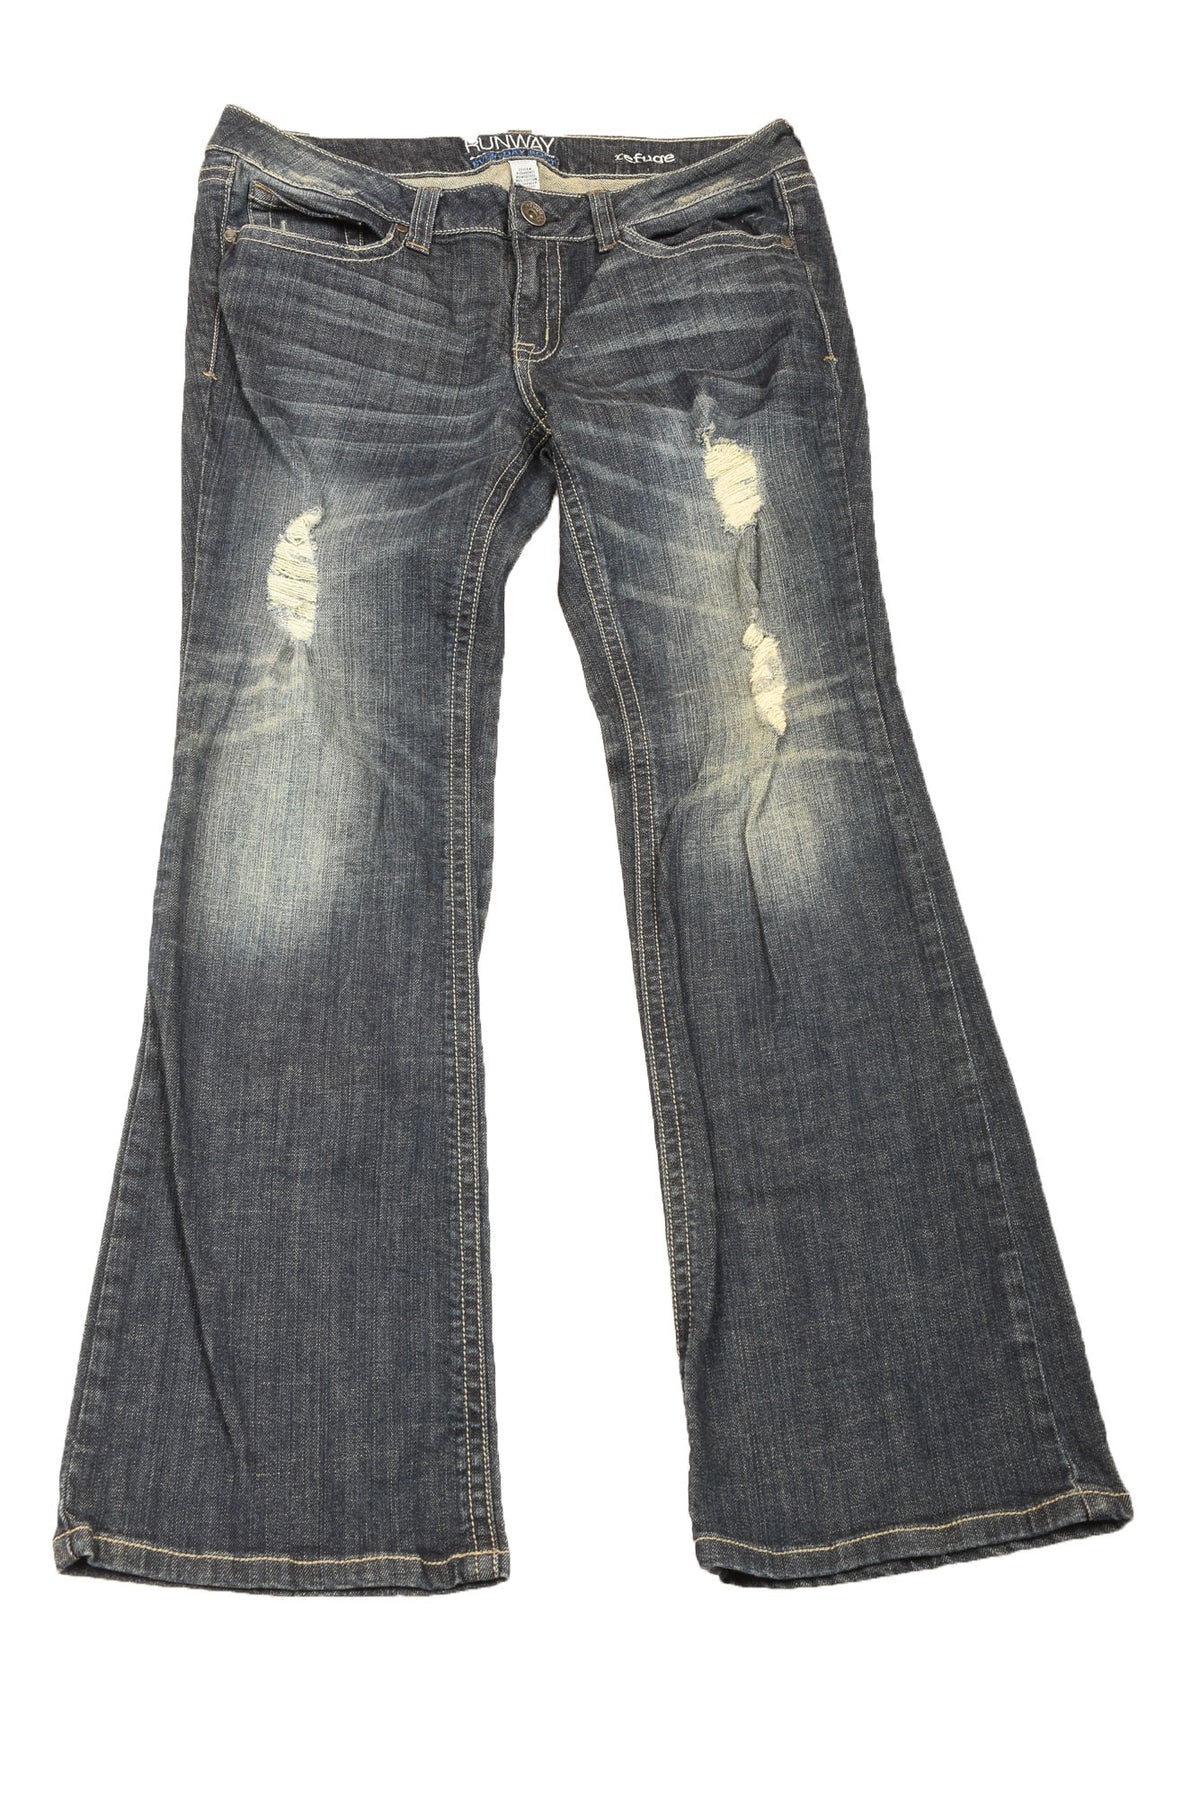 Refuge ibiza jeans womens - Gem